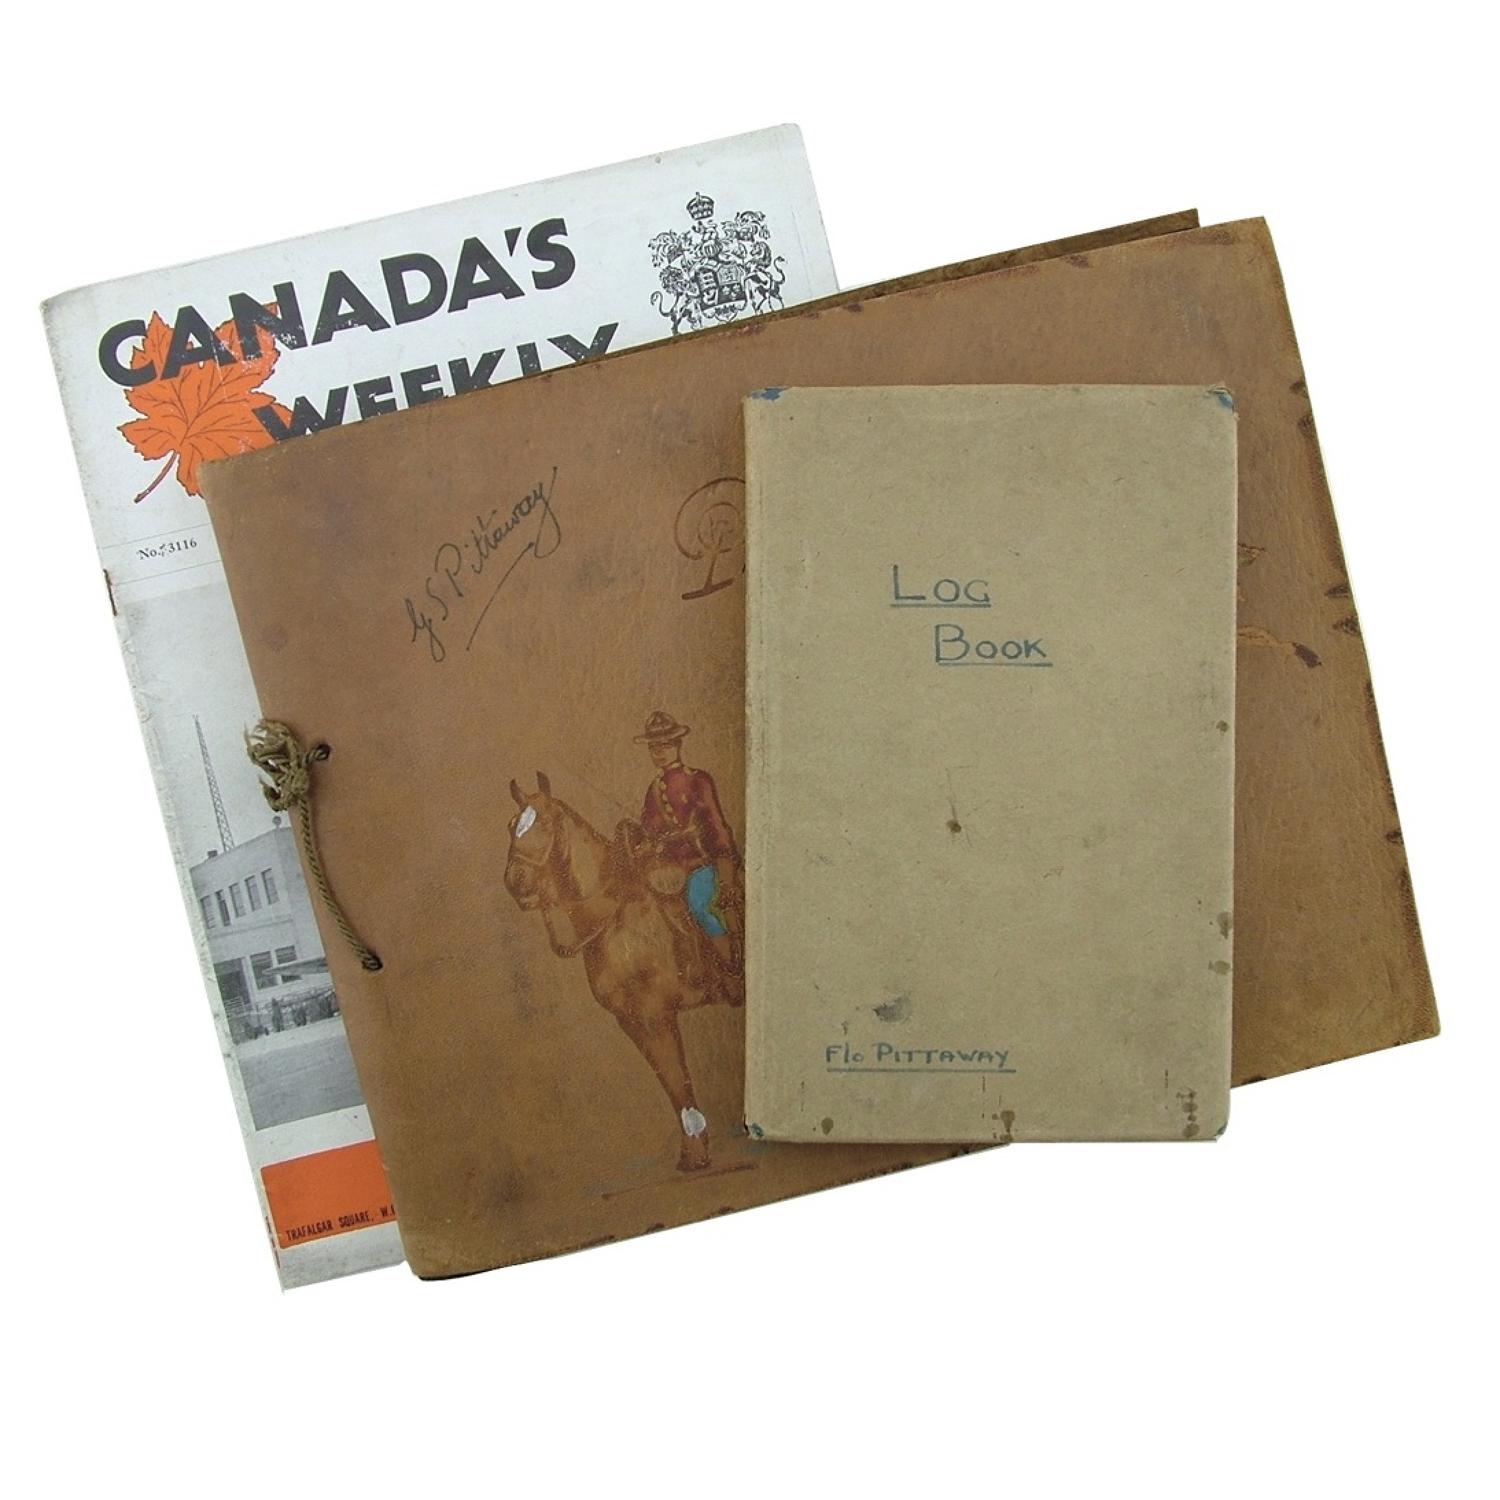 RAF Navigator's log book & album